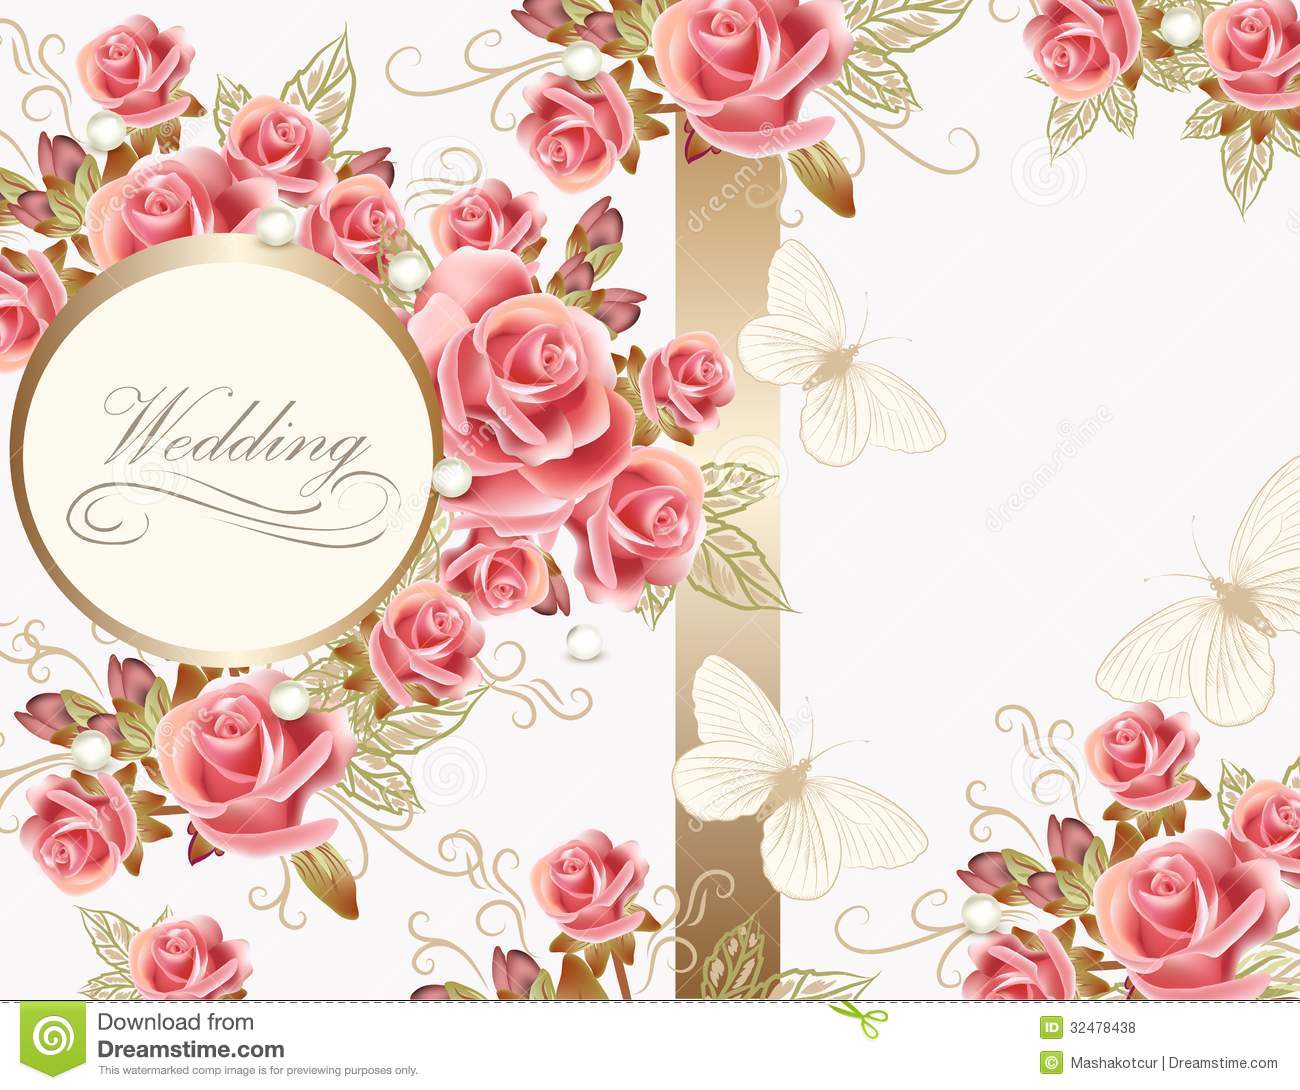 Wedding Greeting Cards Design